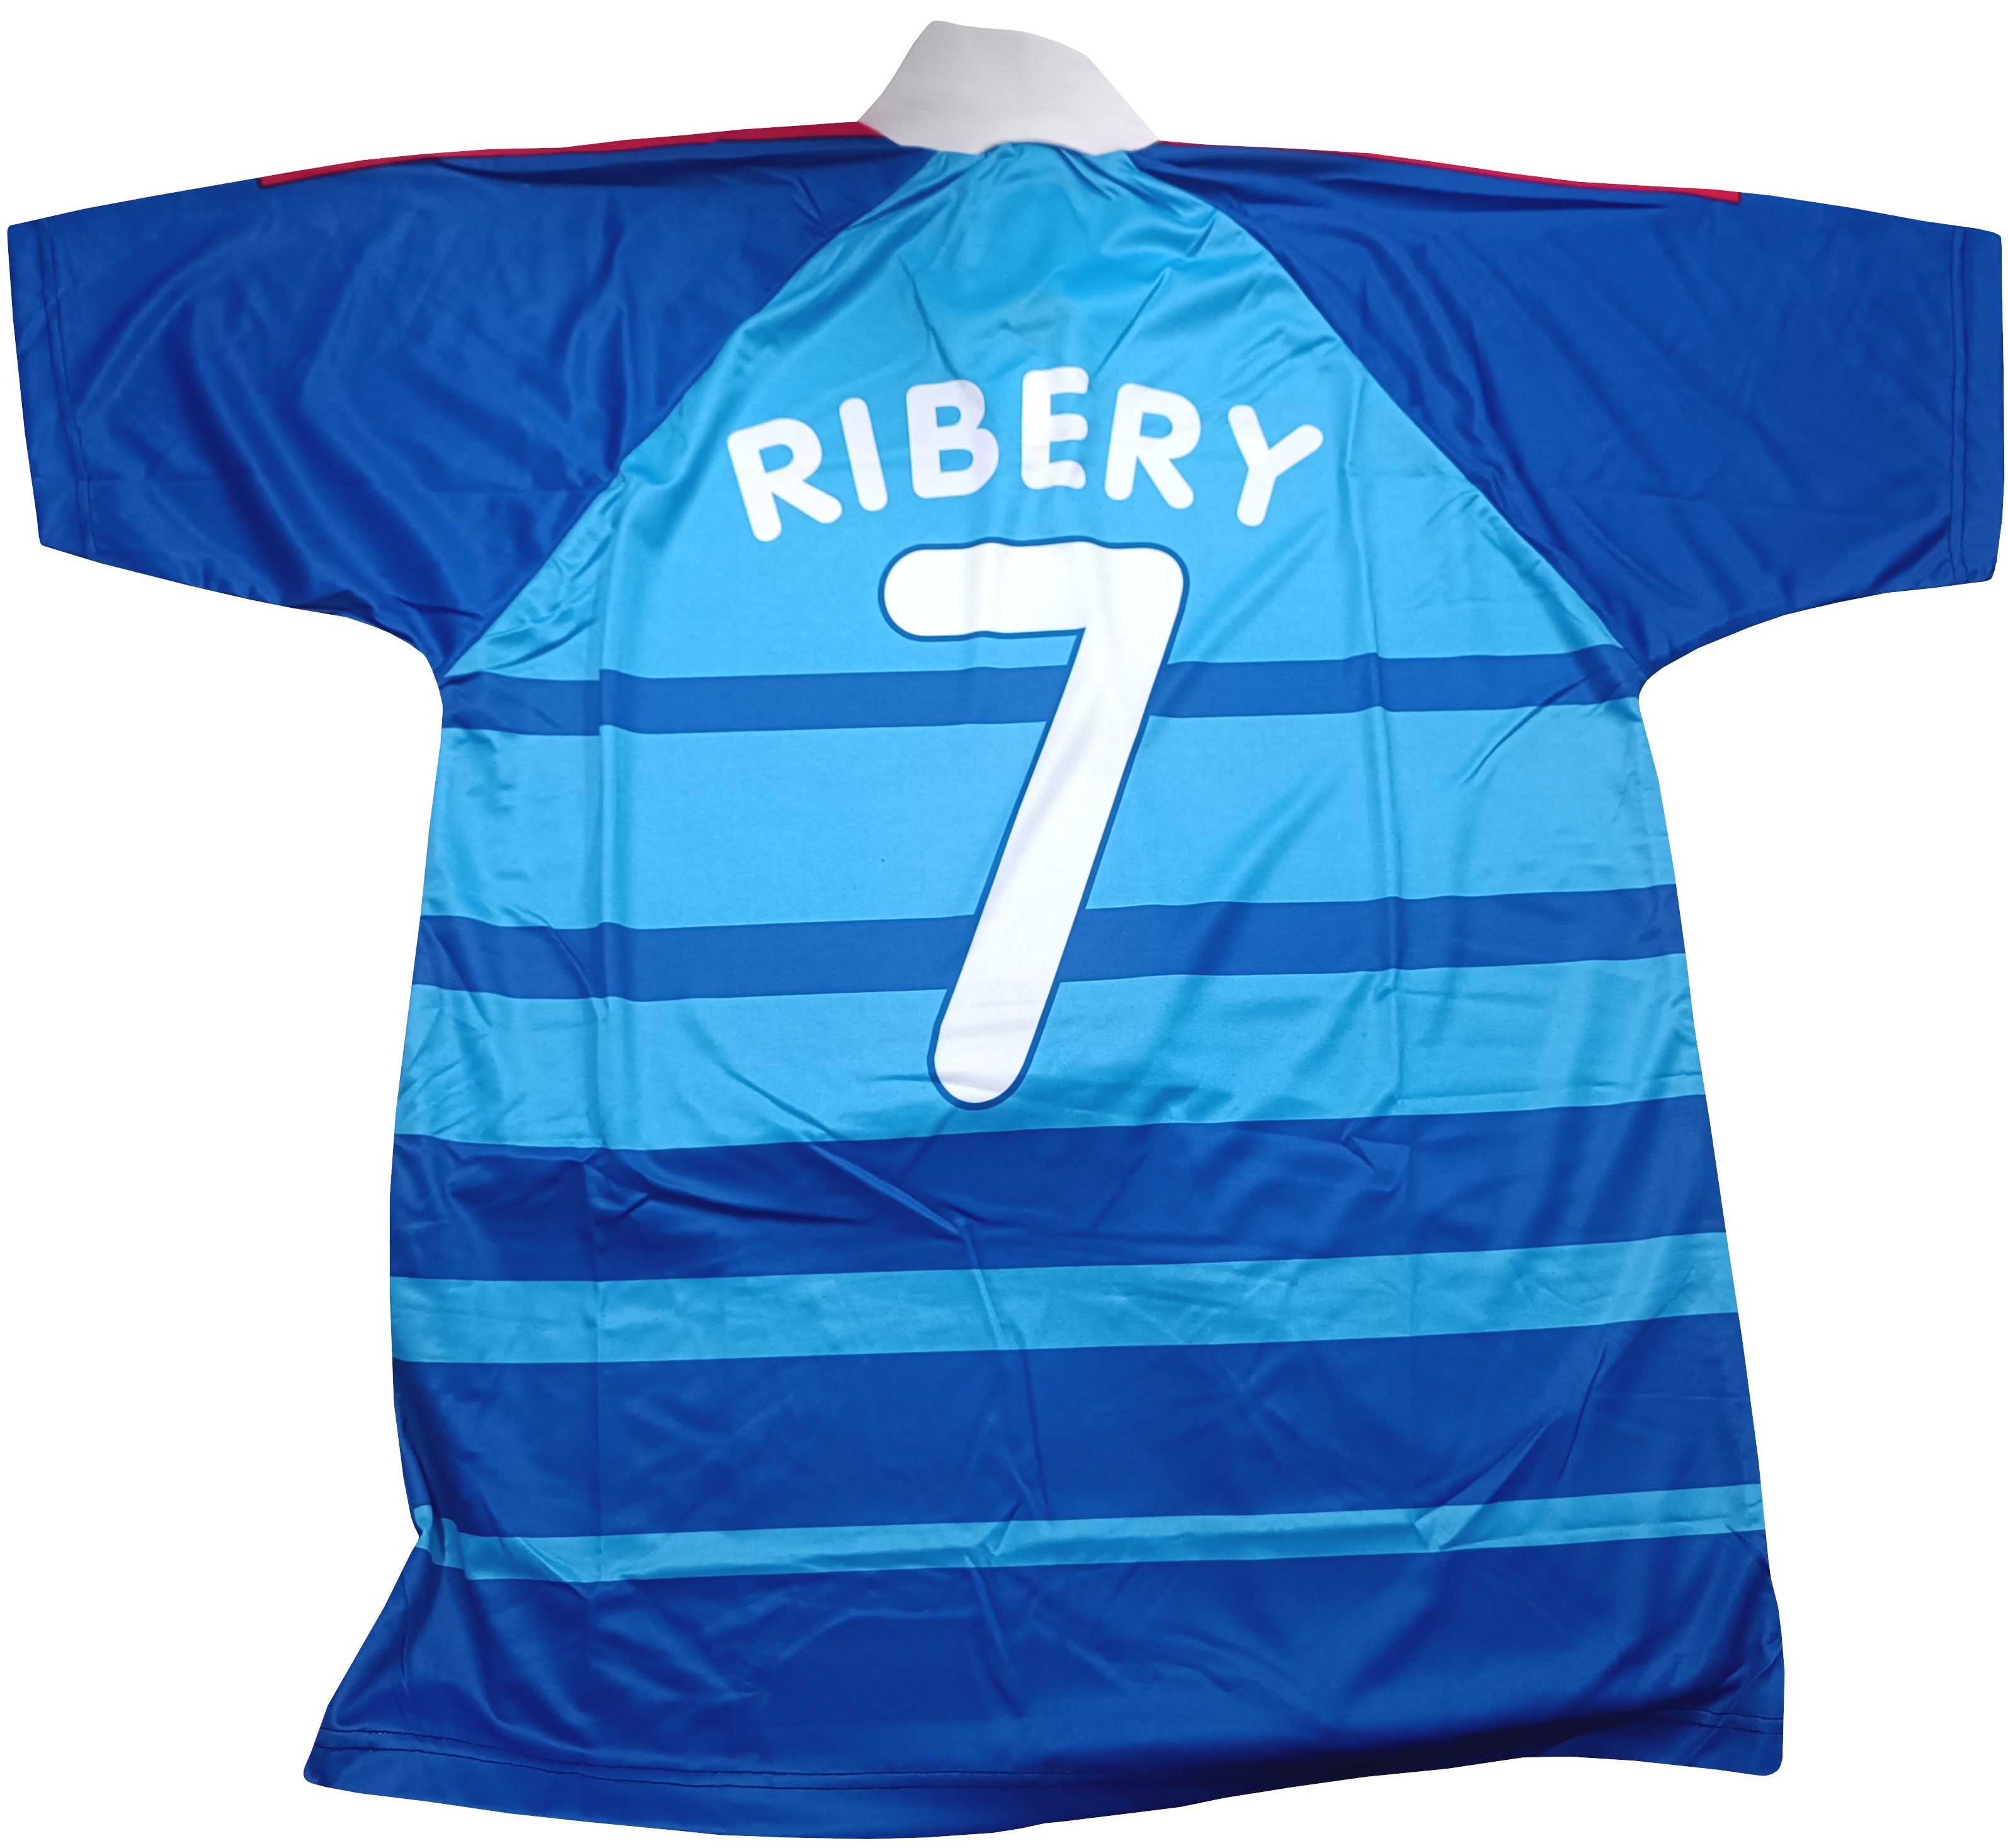 Fotbalový dres Ribery 7 Francie - výprodej Velikost: S povánoční sleva